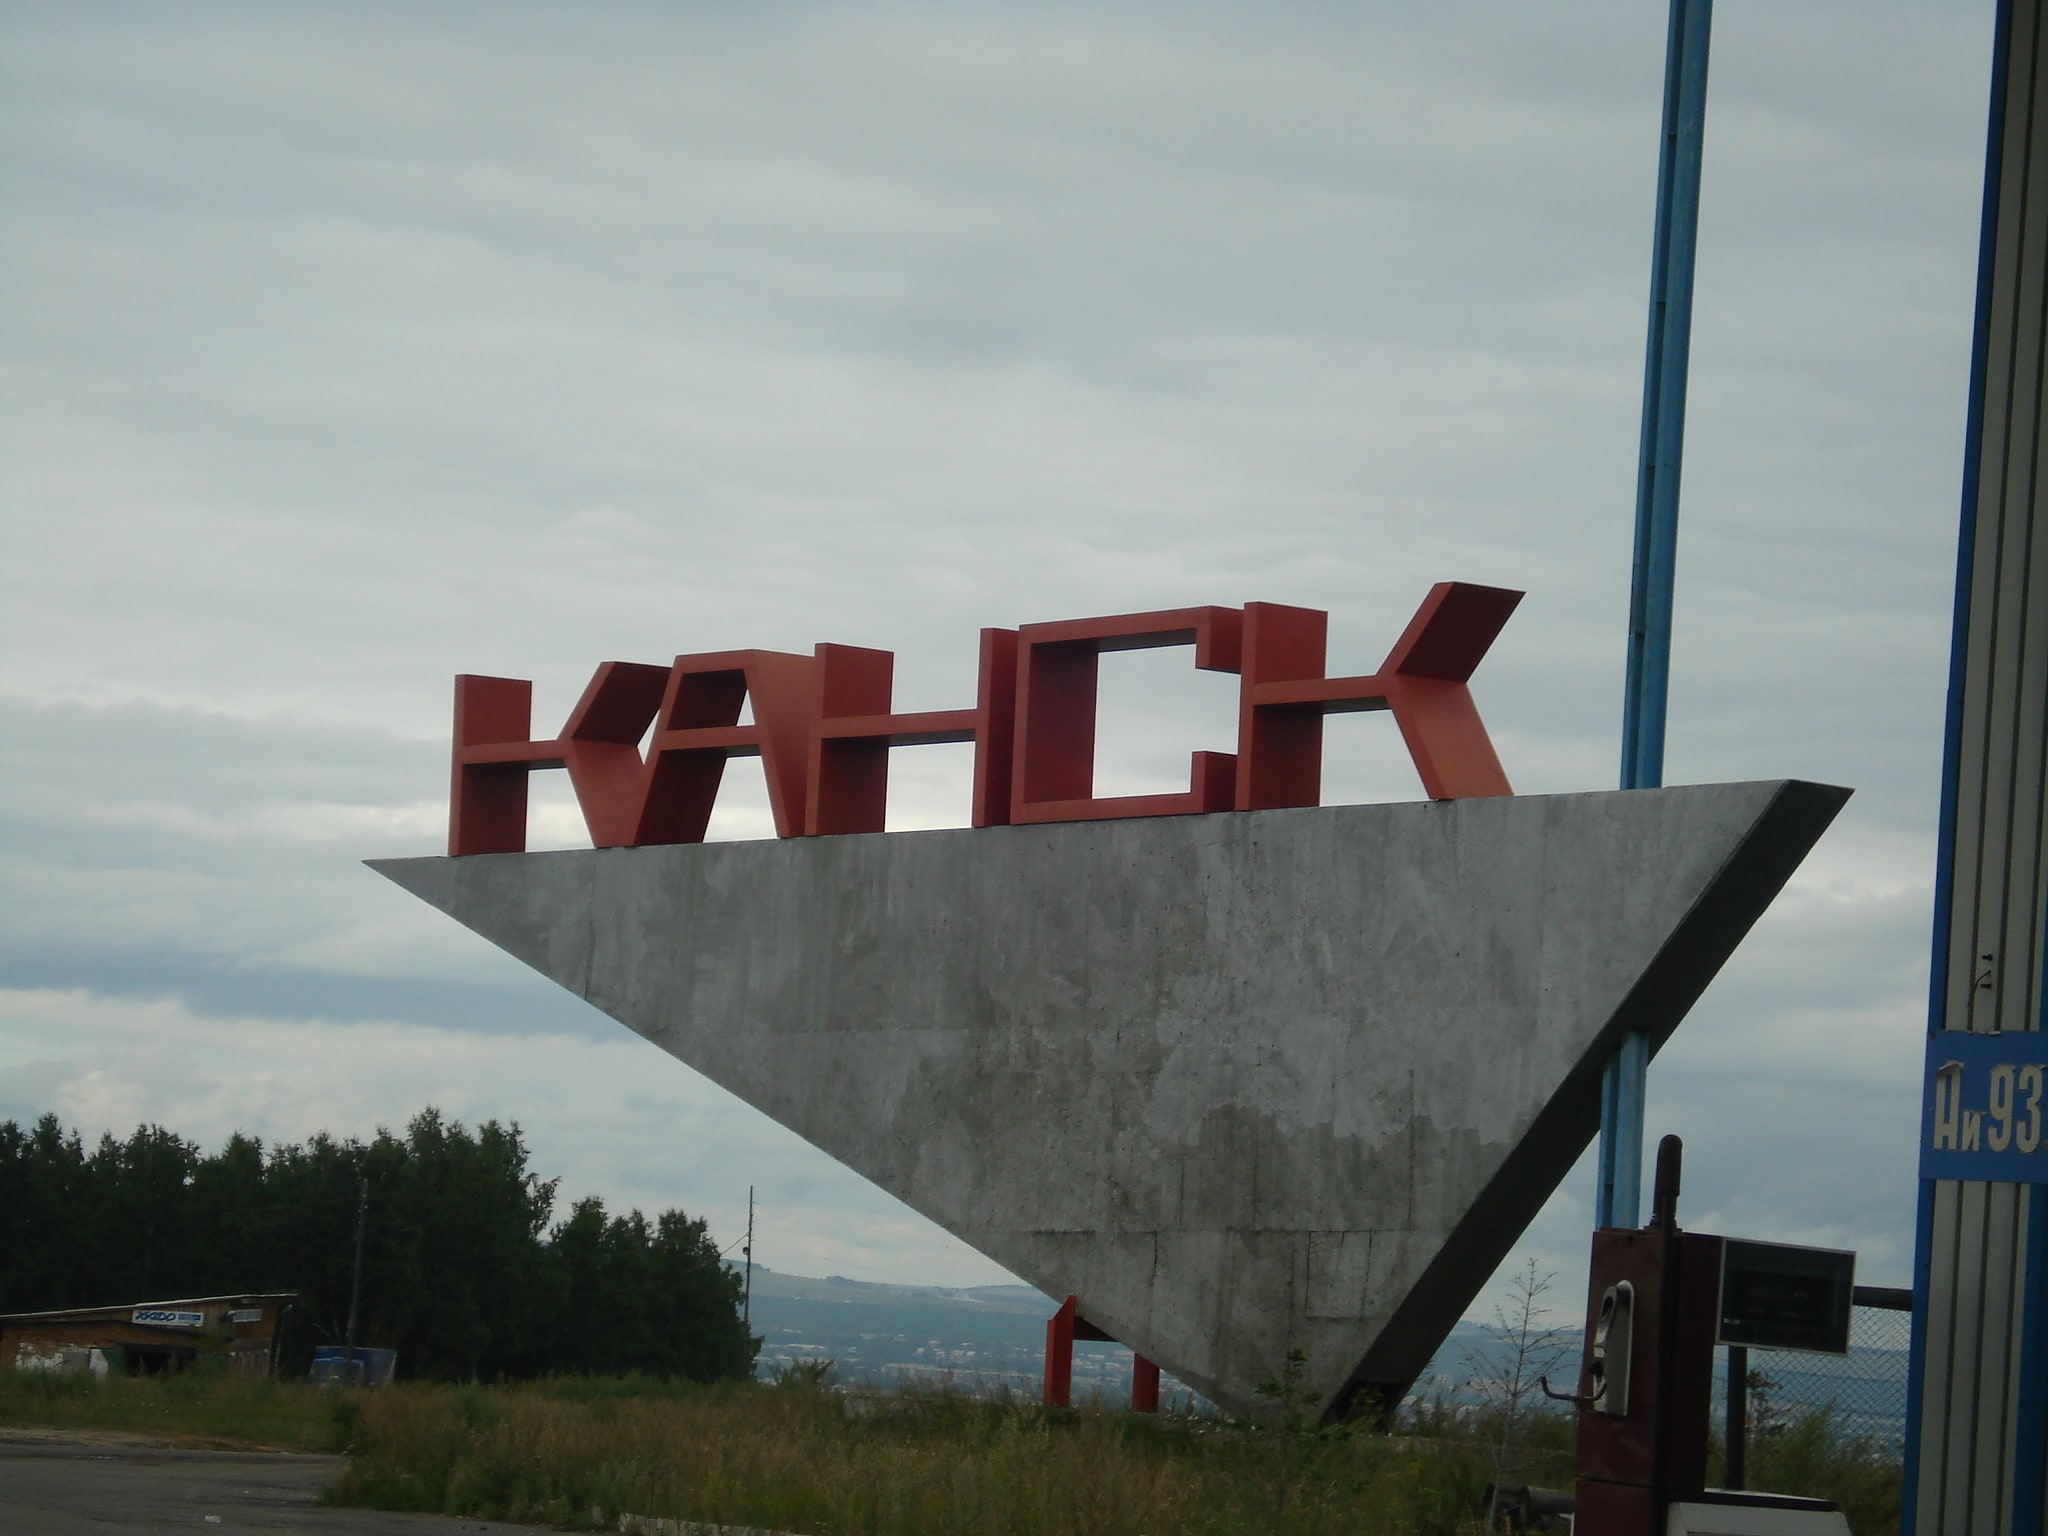 Kansk, Russia